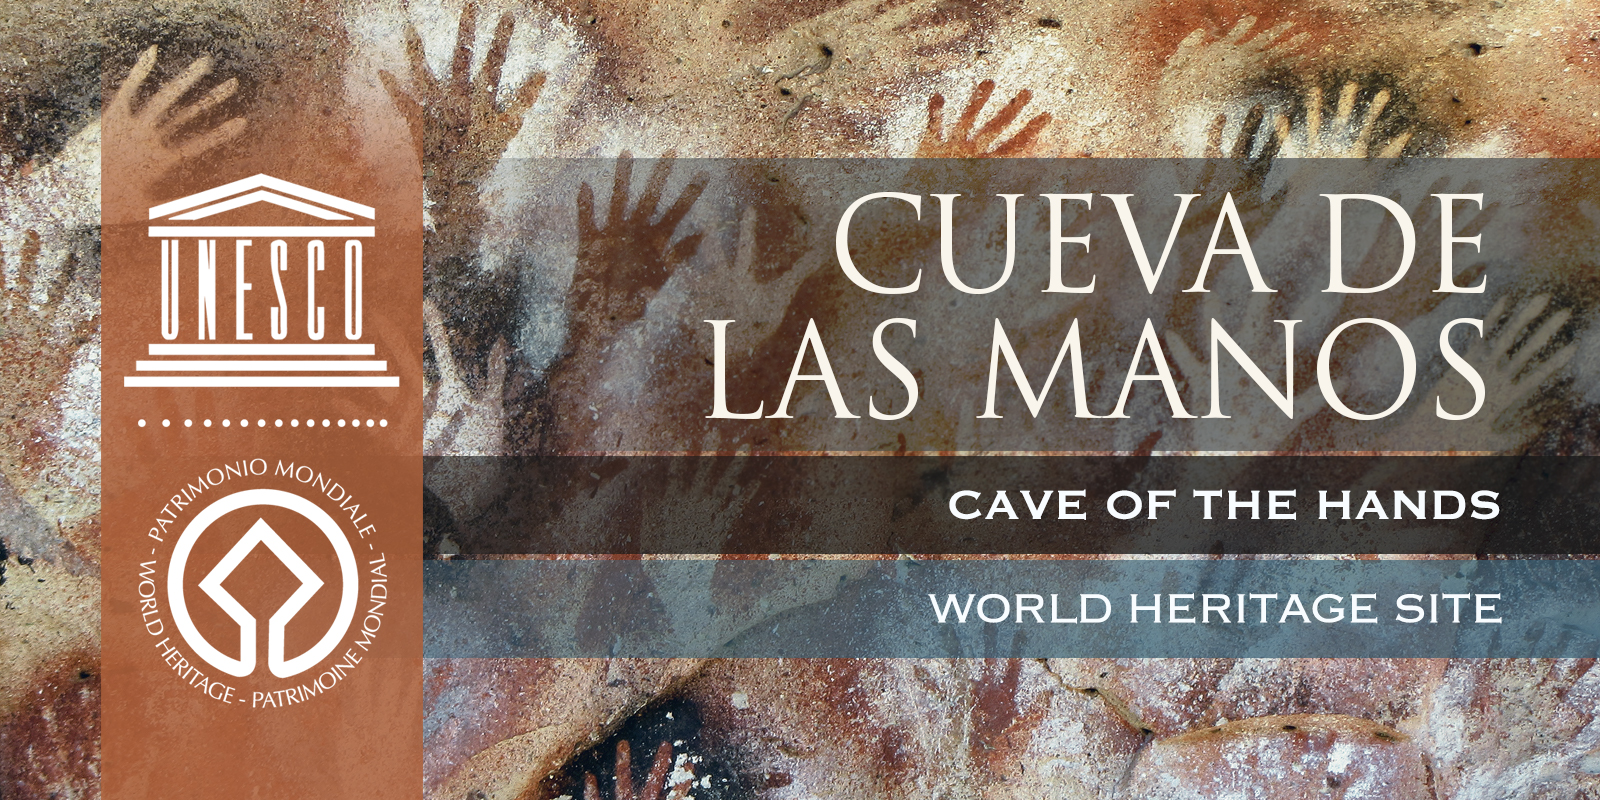 Rock Art Cueva de las Manos Cave of the Hands Archaeology Argentina UNESCO World Heritage Site